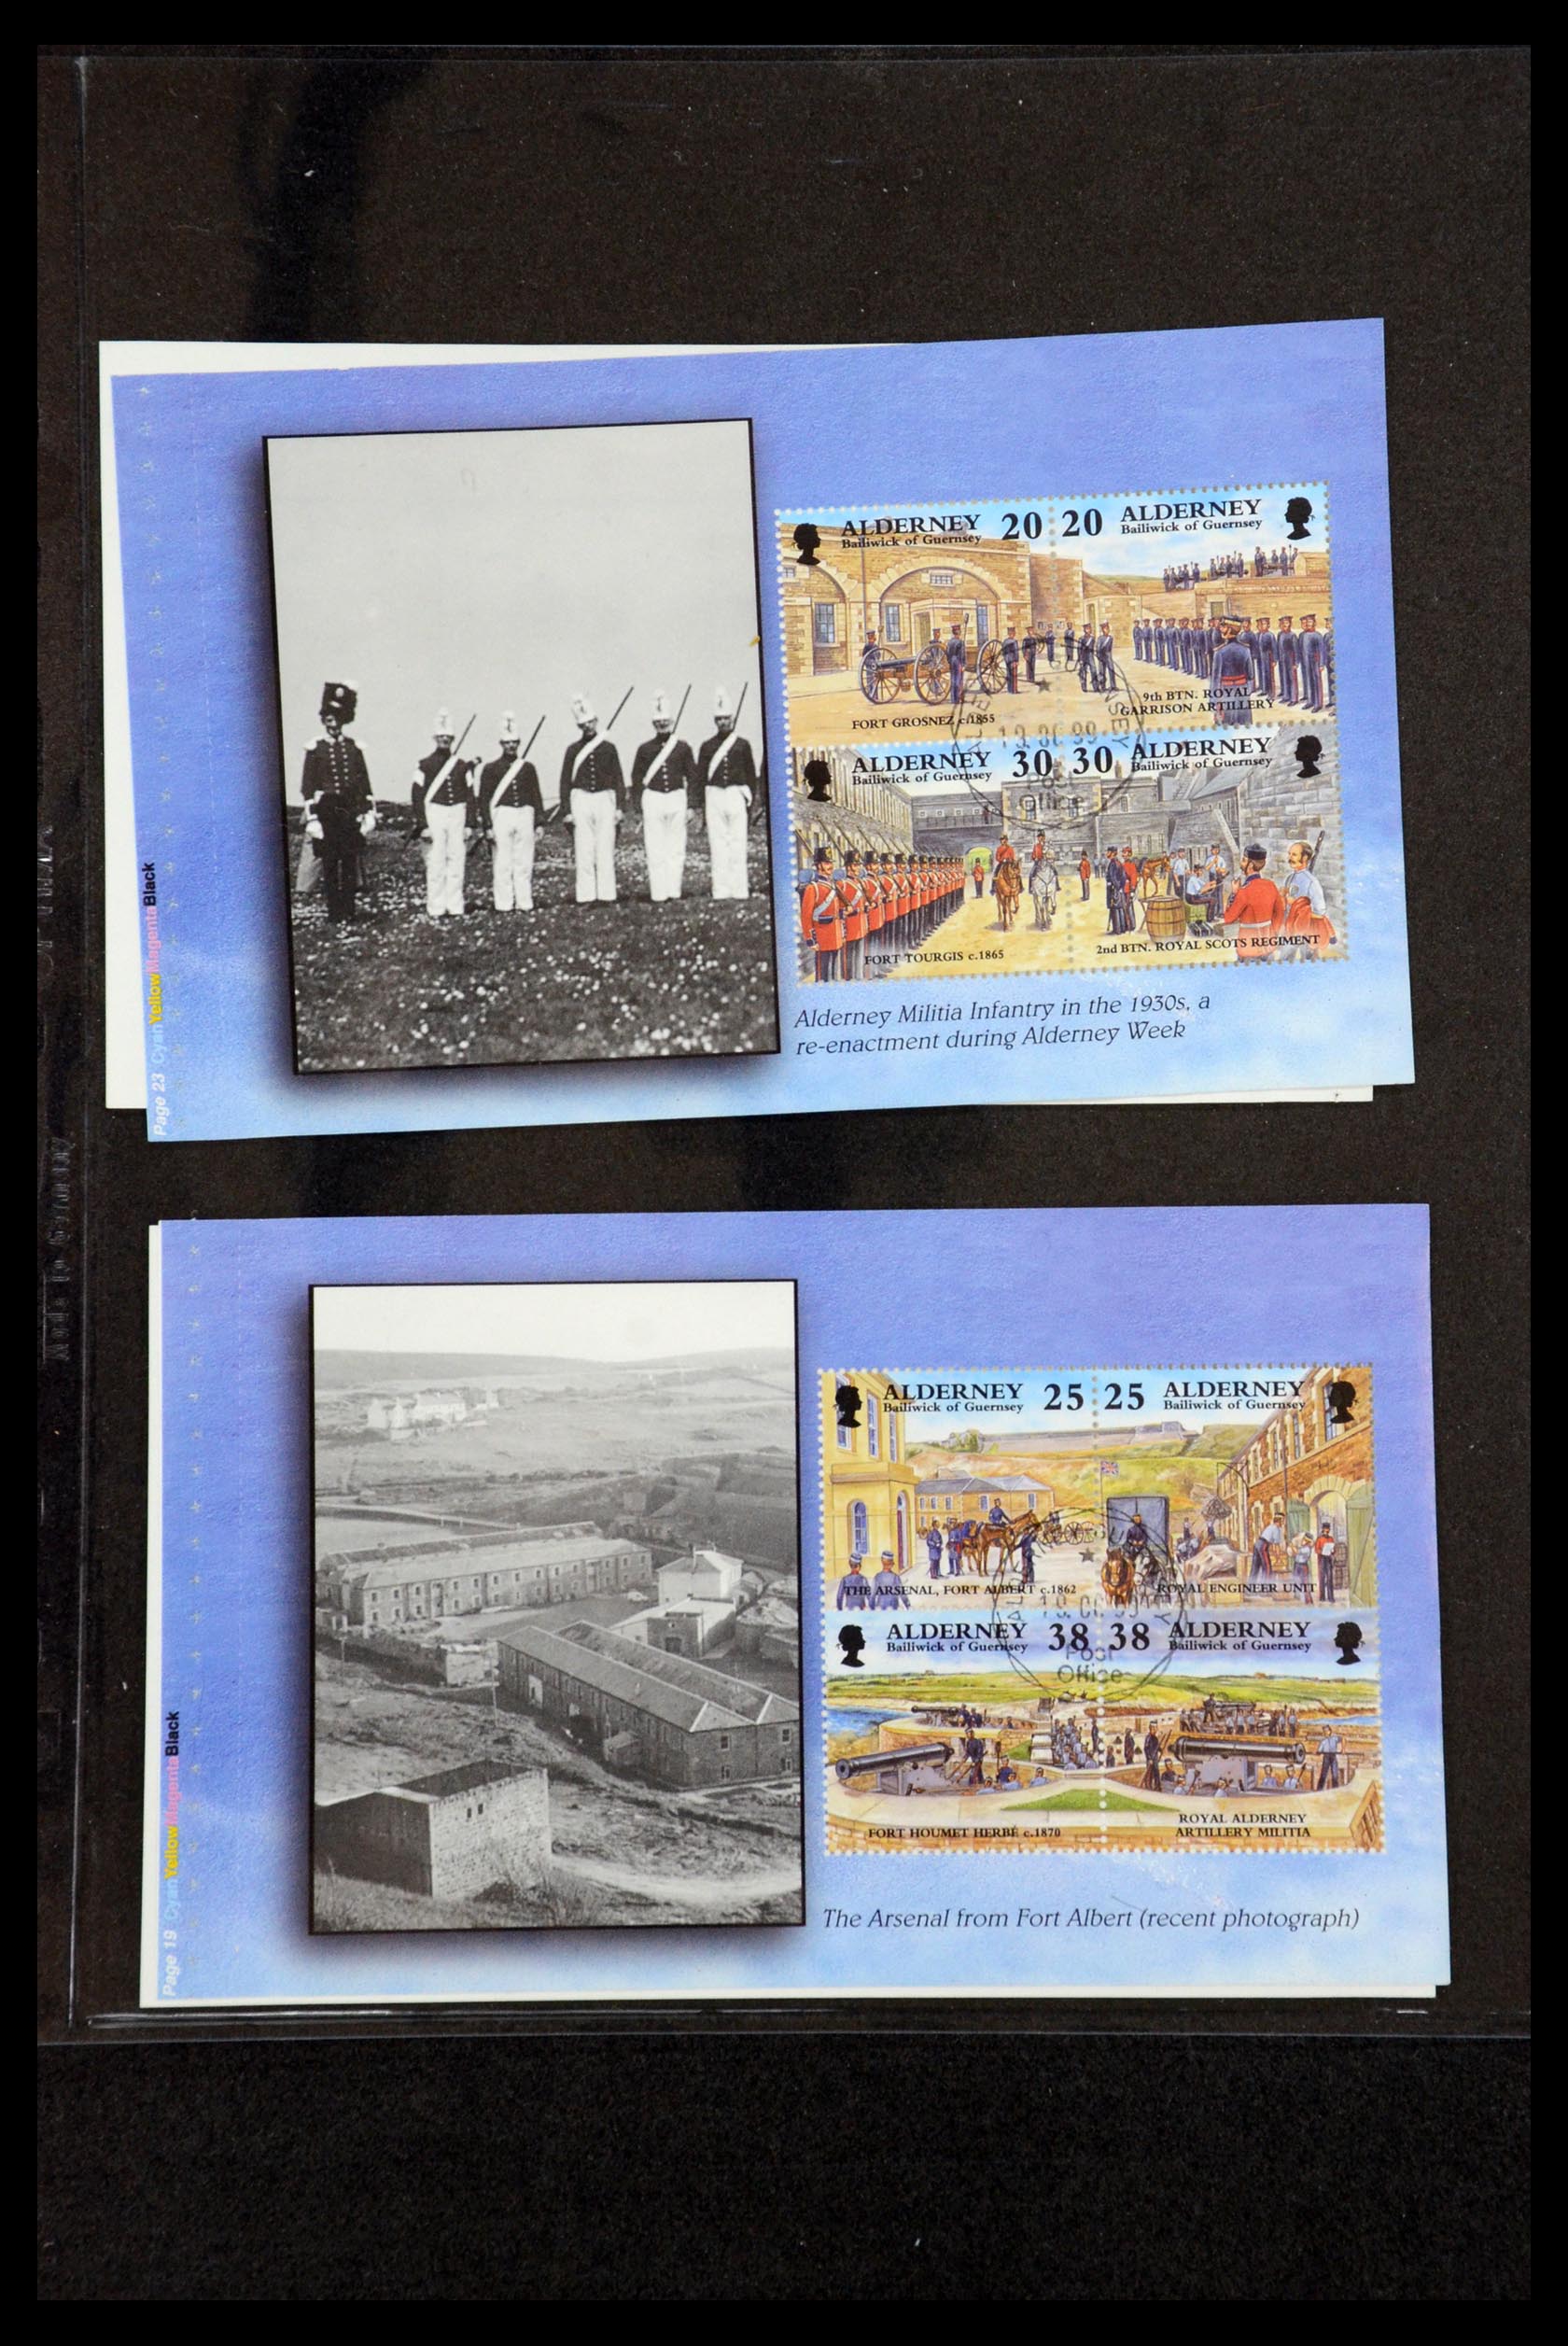 35976 018 - Stamp collection 35976 Guernsey and Alderney stamp booklets 1969-2015!